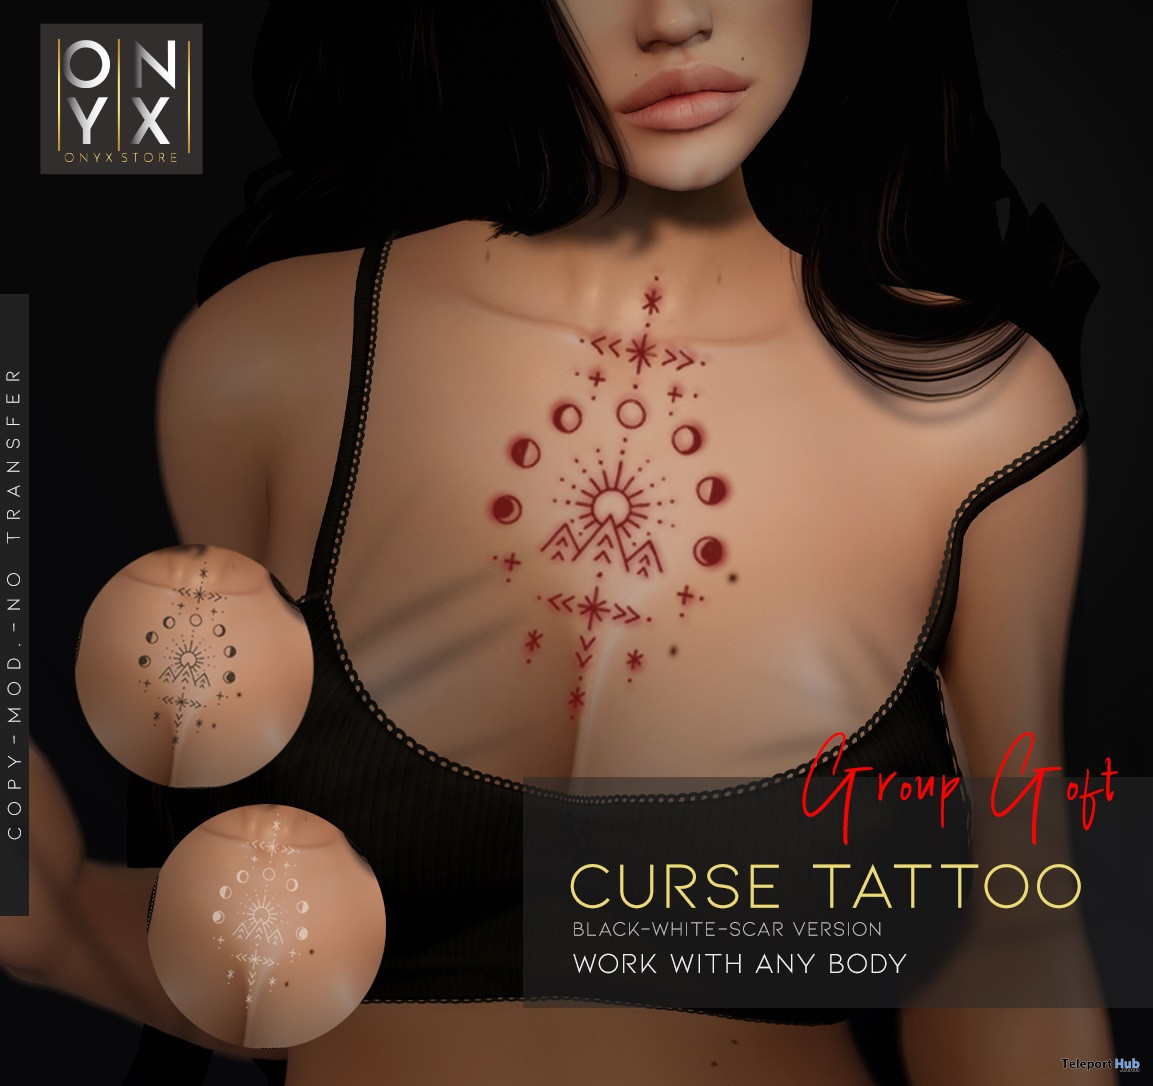 Curse Tattoo November 2021 Group Gift by [Onyx] Store - Teleport Hub - teleporthub.com